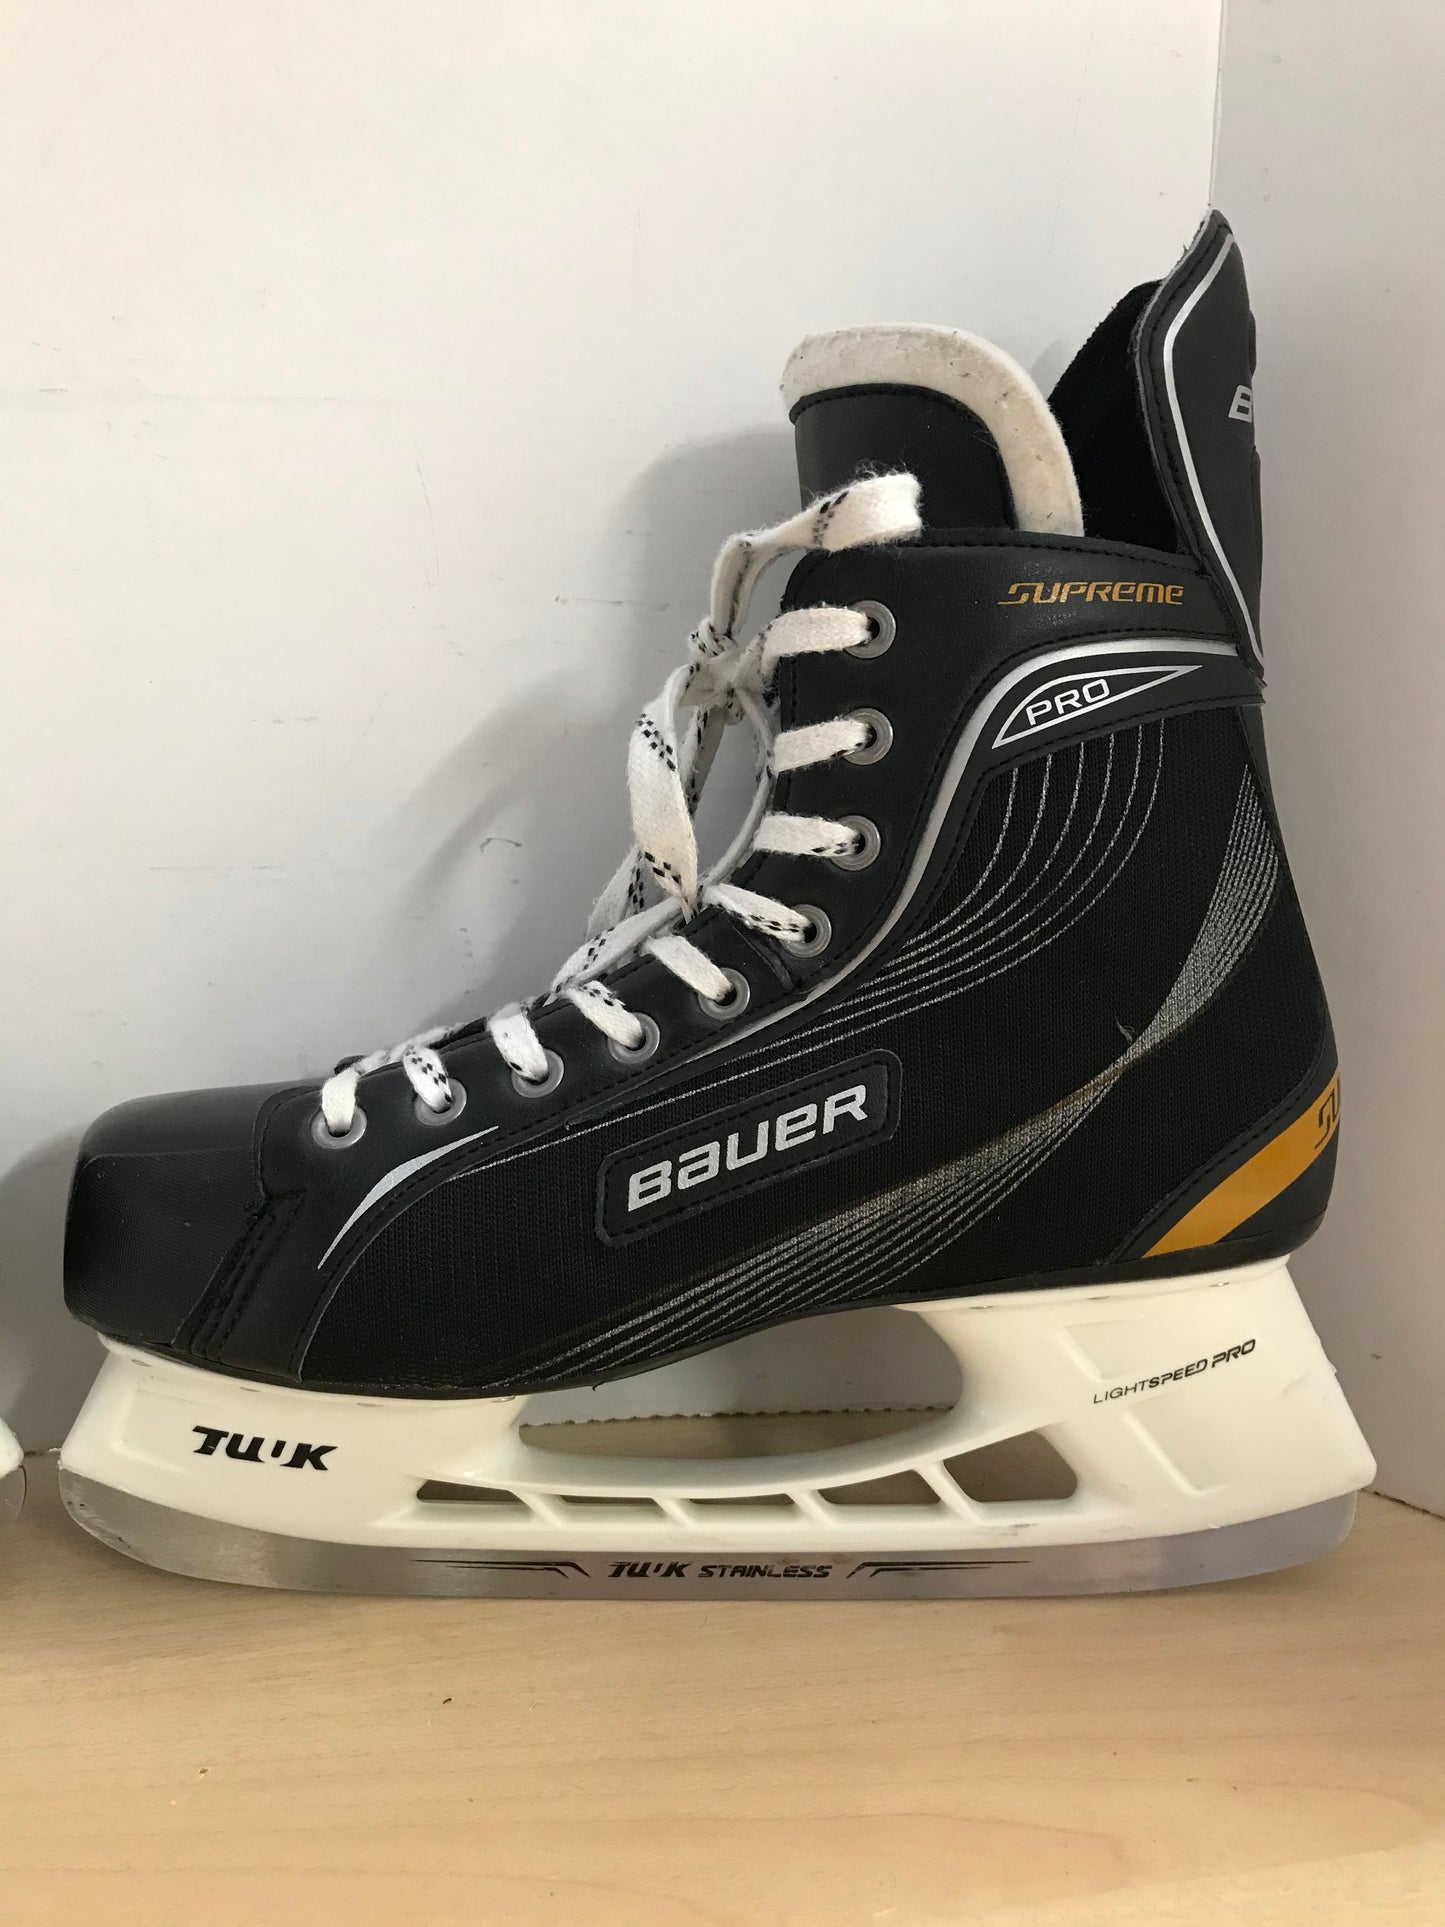 Hockey Skates Men's Size 11.5 Shoe Size Bauer Supreme Pro New Demo Model